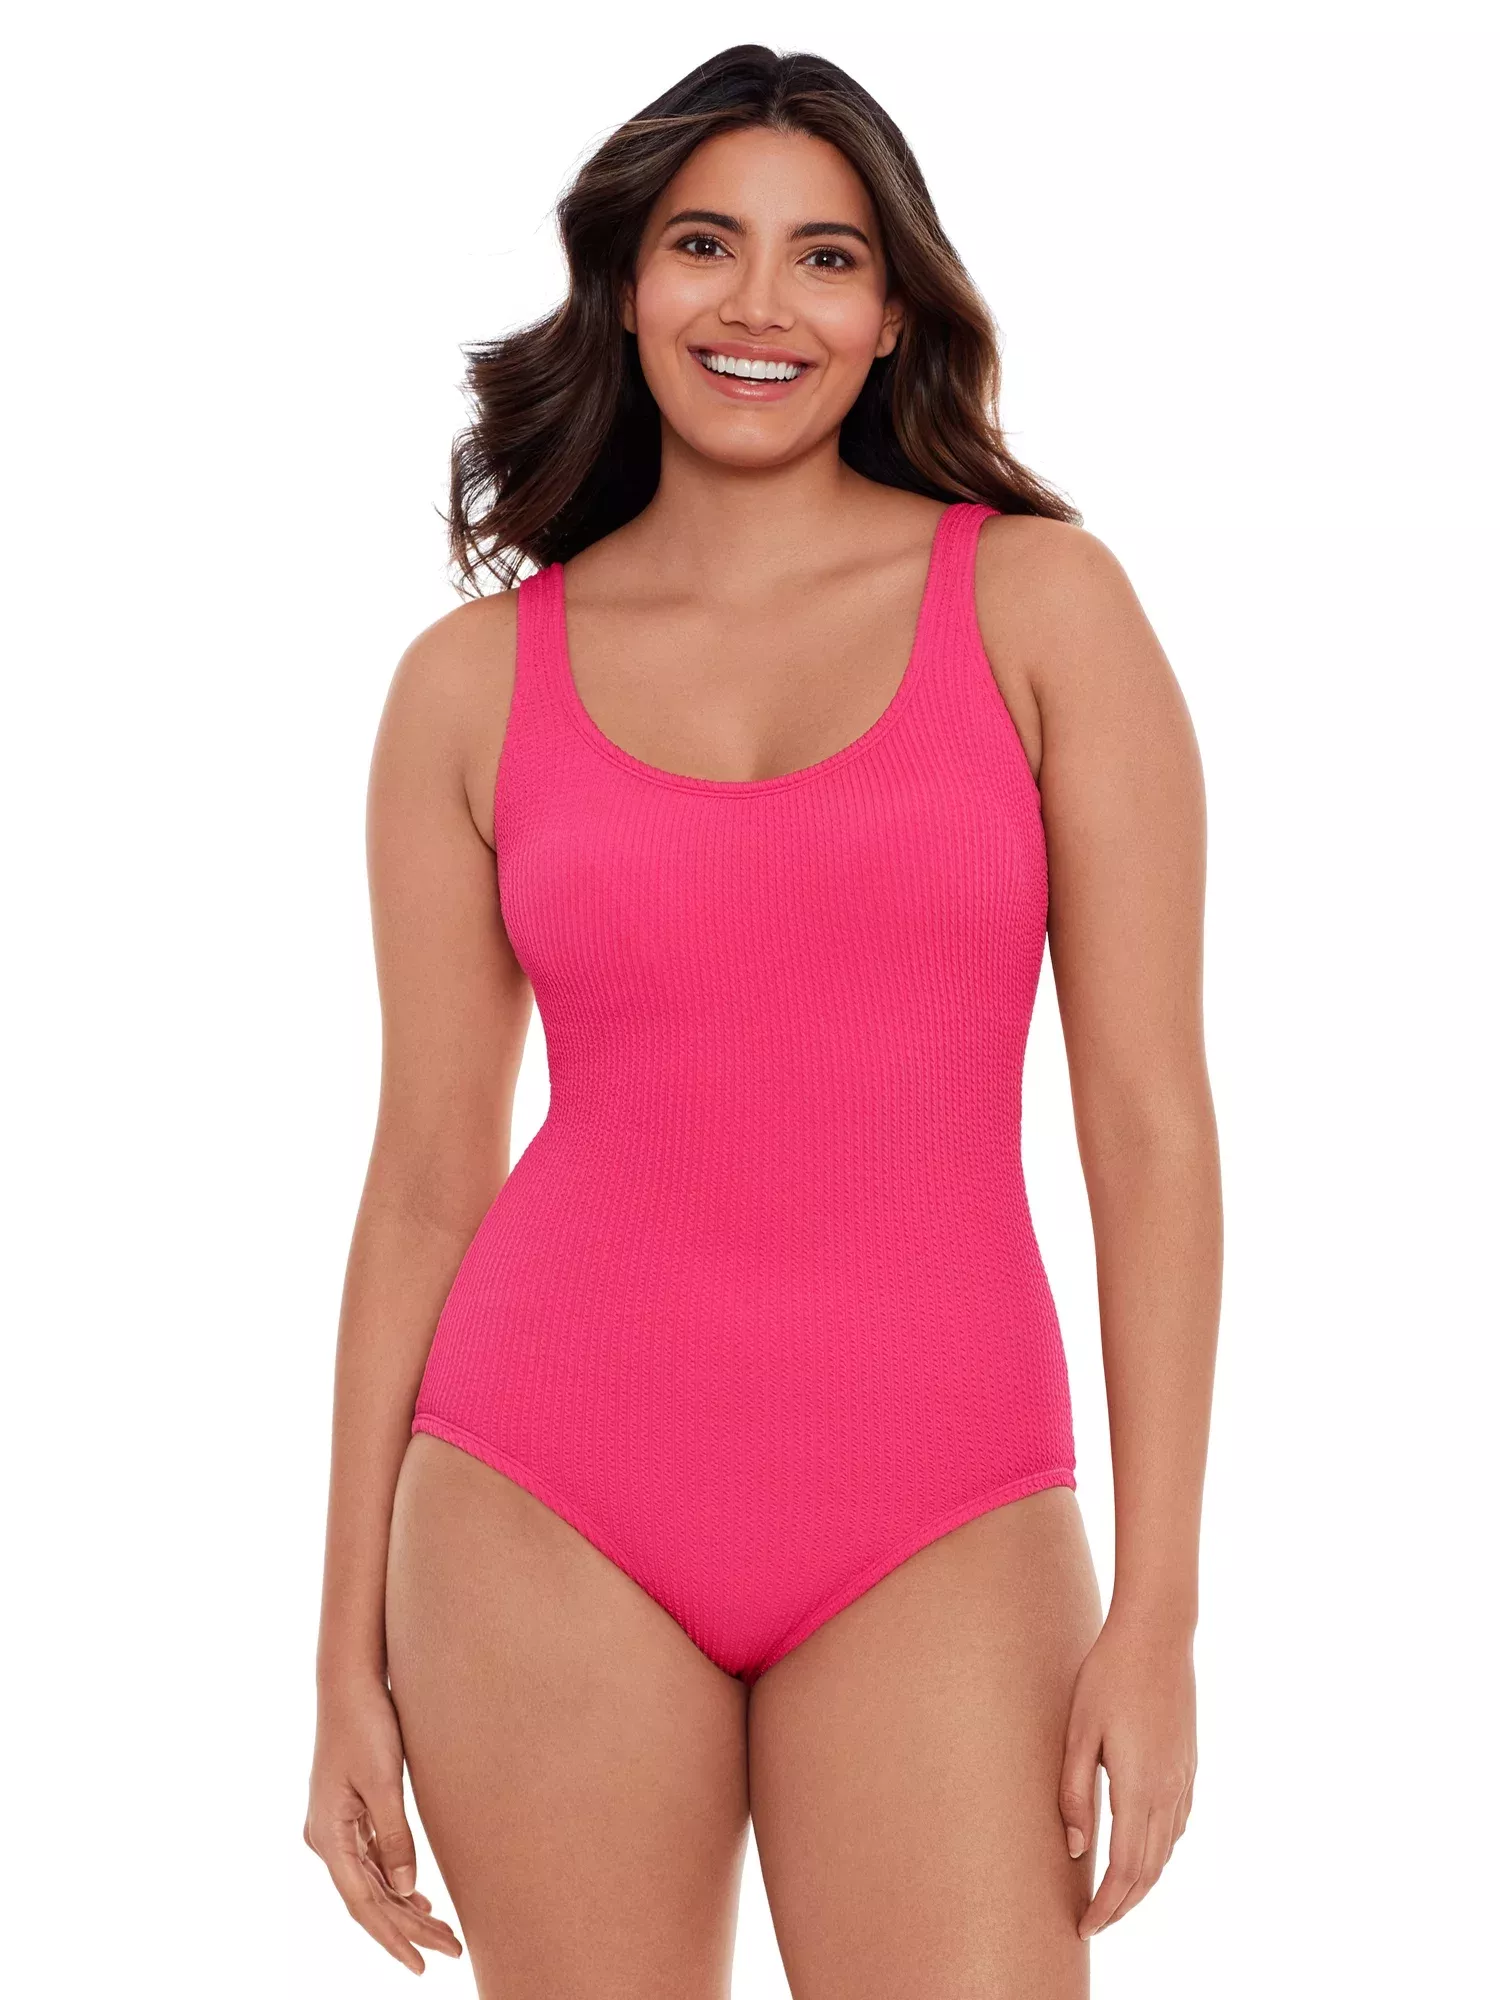 Aqua Eve Plus Size Bathing Suits for Women One Piece Swimsuits One Shoulder  Ruffle Tummy Control Swimwear, Hot Pink, 18 Plus